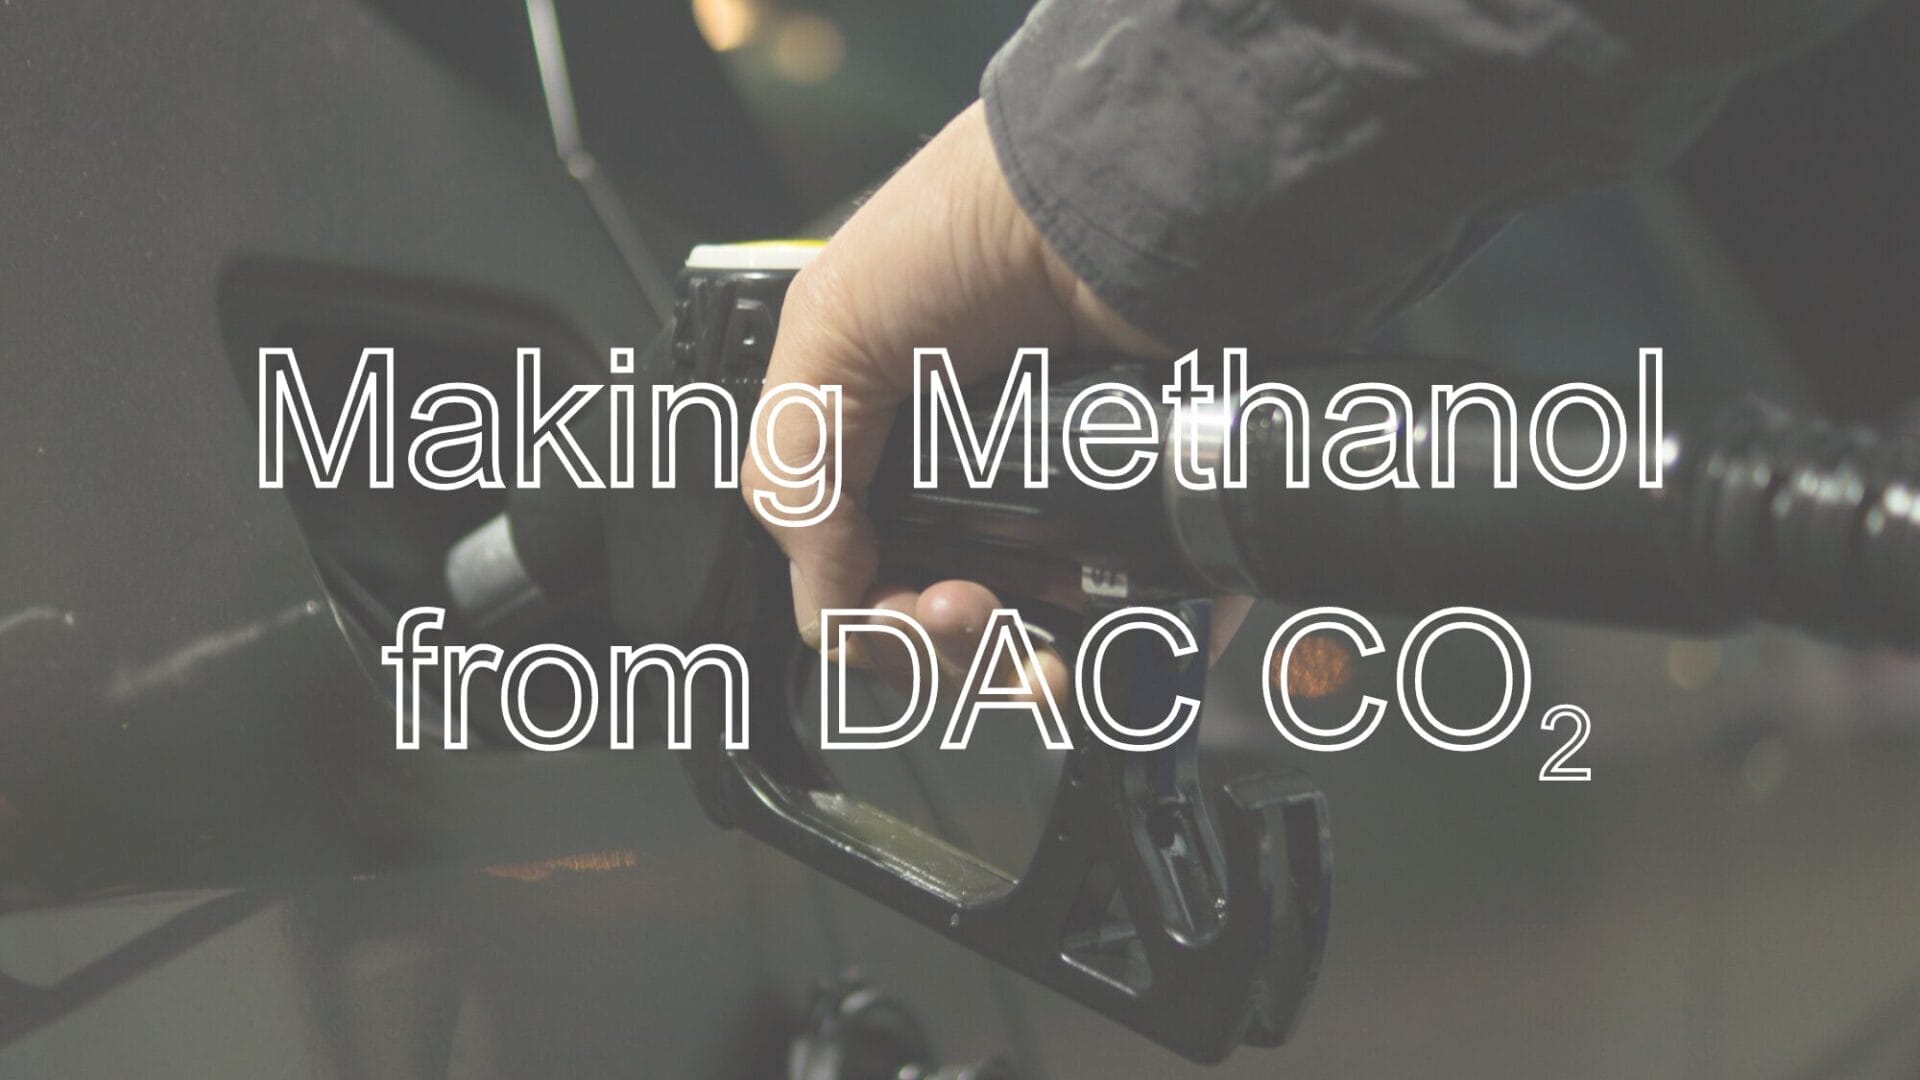 Making Methanol from DAC CO2